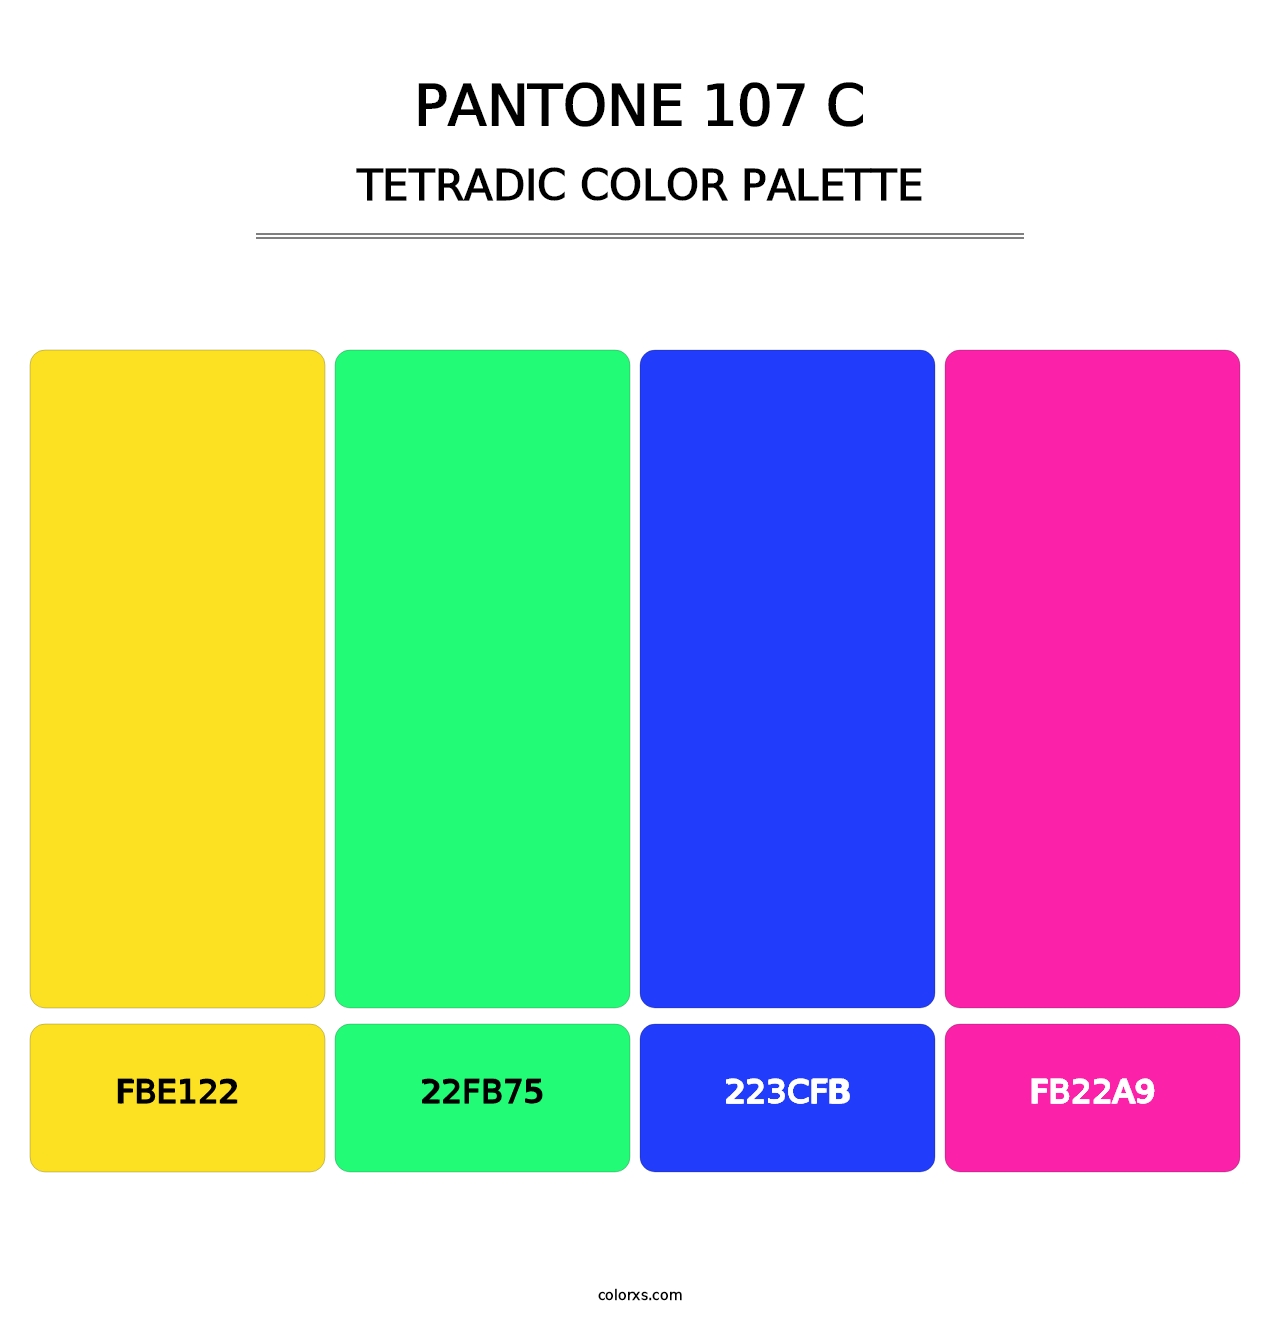 PANTONE 107 C - Tetradic Color Palette